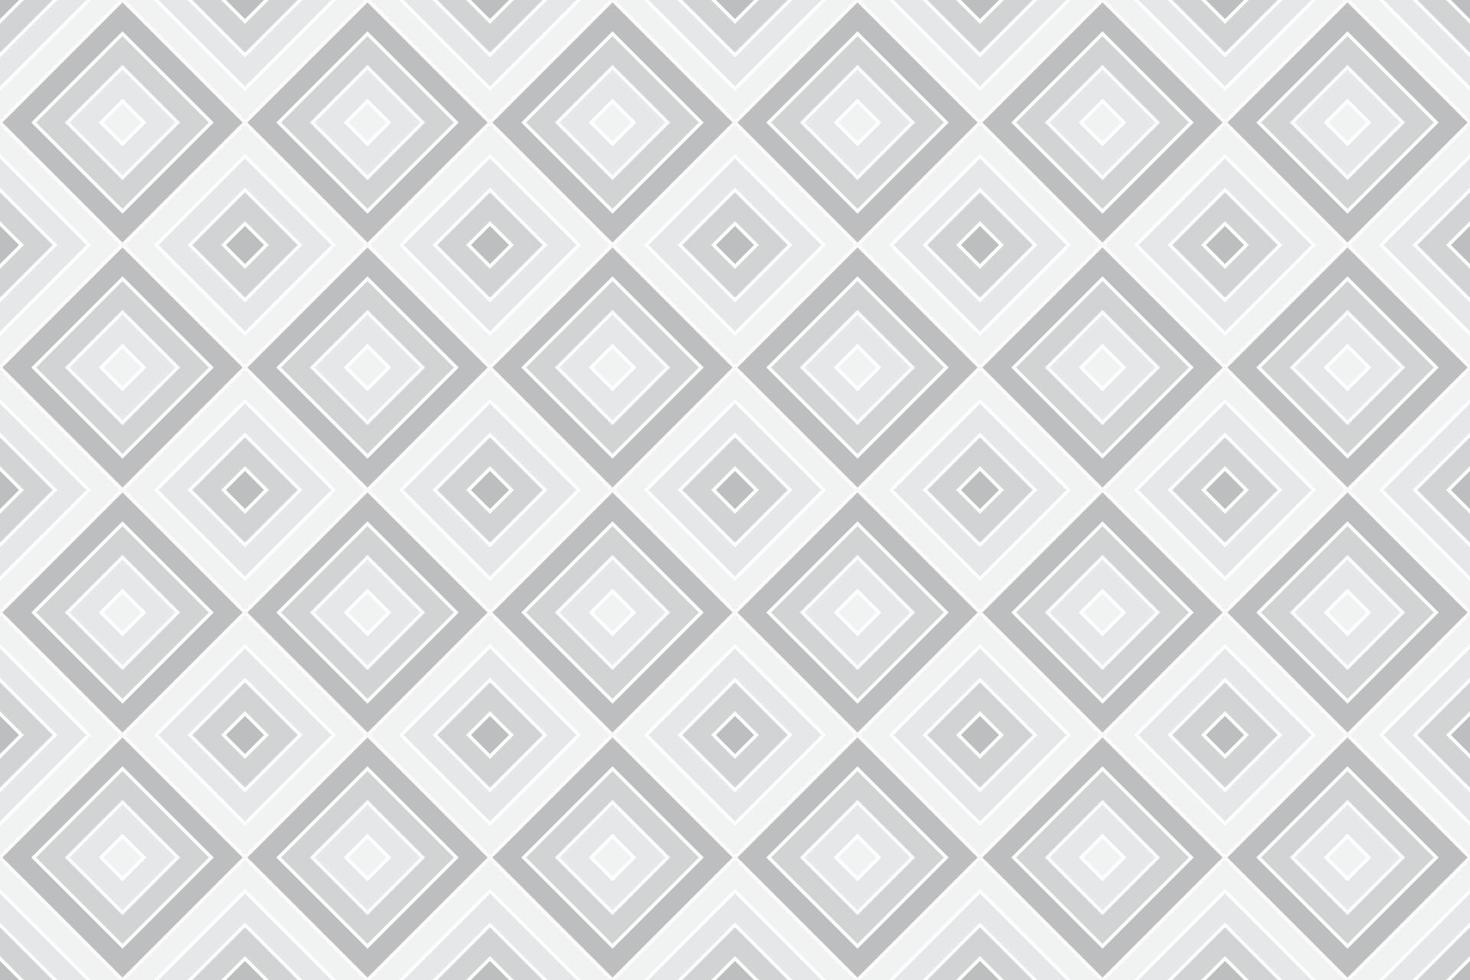 seamless modern gray geometric shape background vector